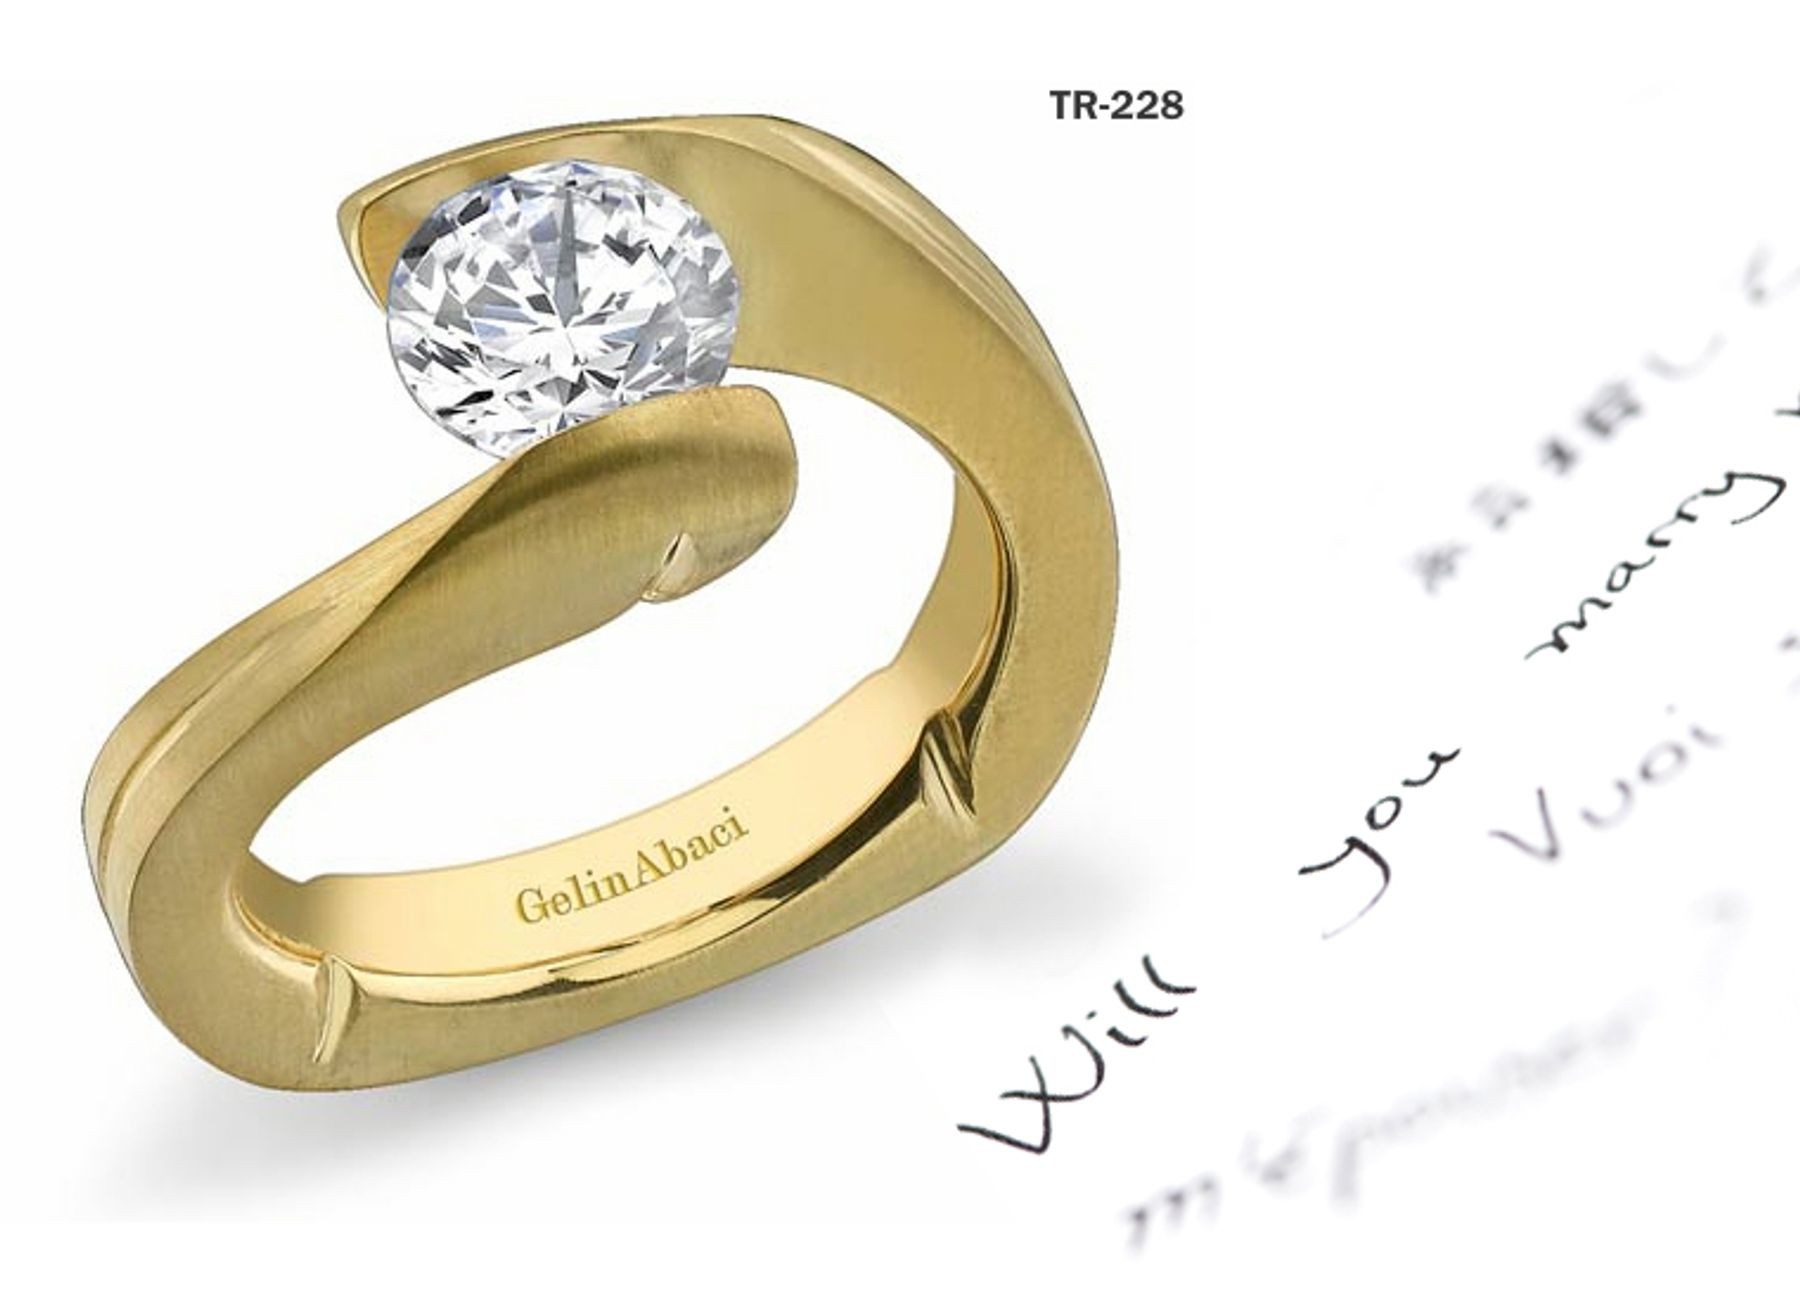 Modern Settings: Tension Set Precious Gemstone New Style Diamond Rings